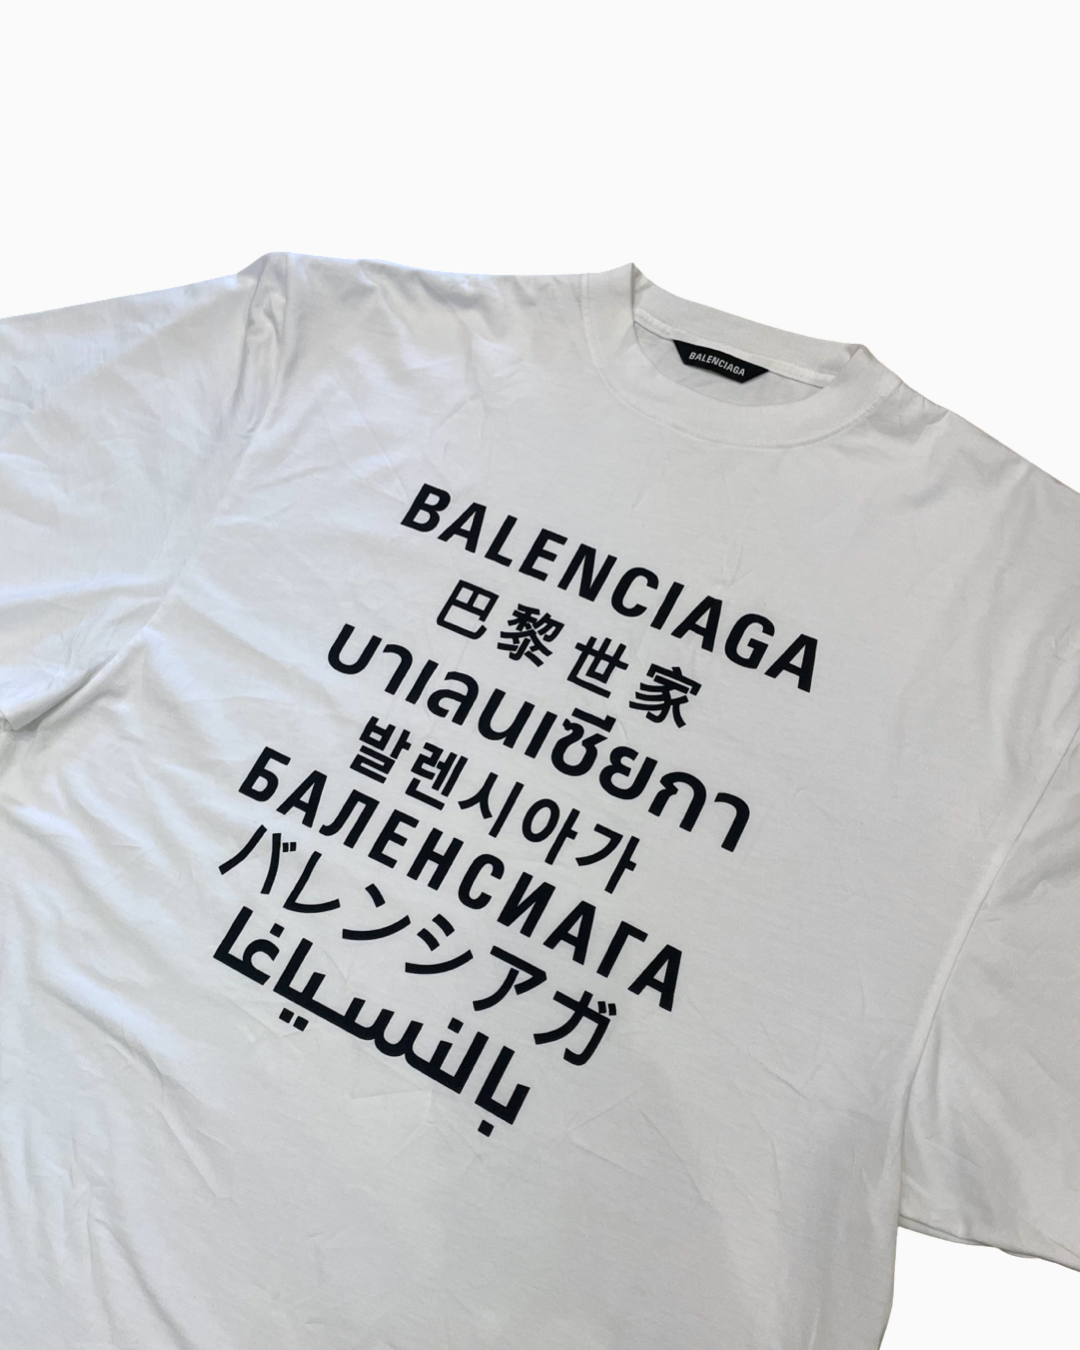 New balenciaga tshirt multi language สดฮต หายากมาก  Shopee Thailand